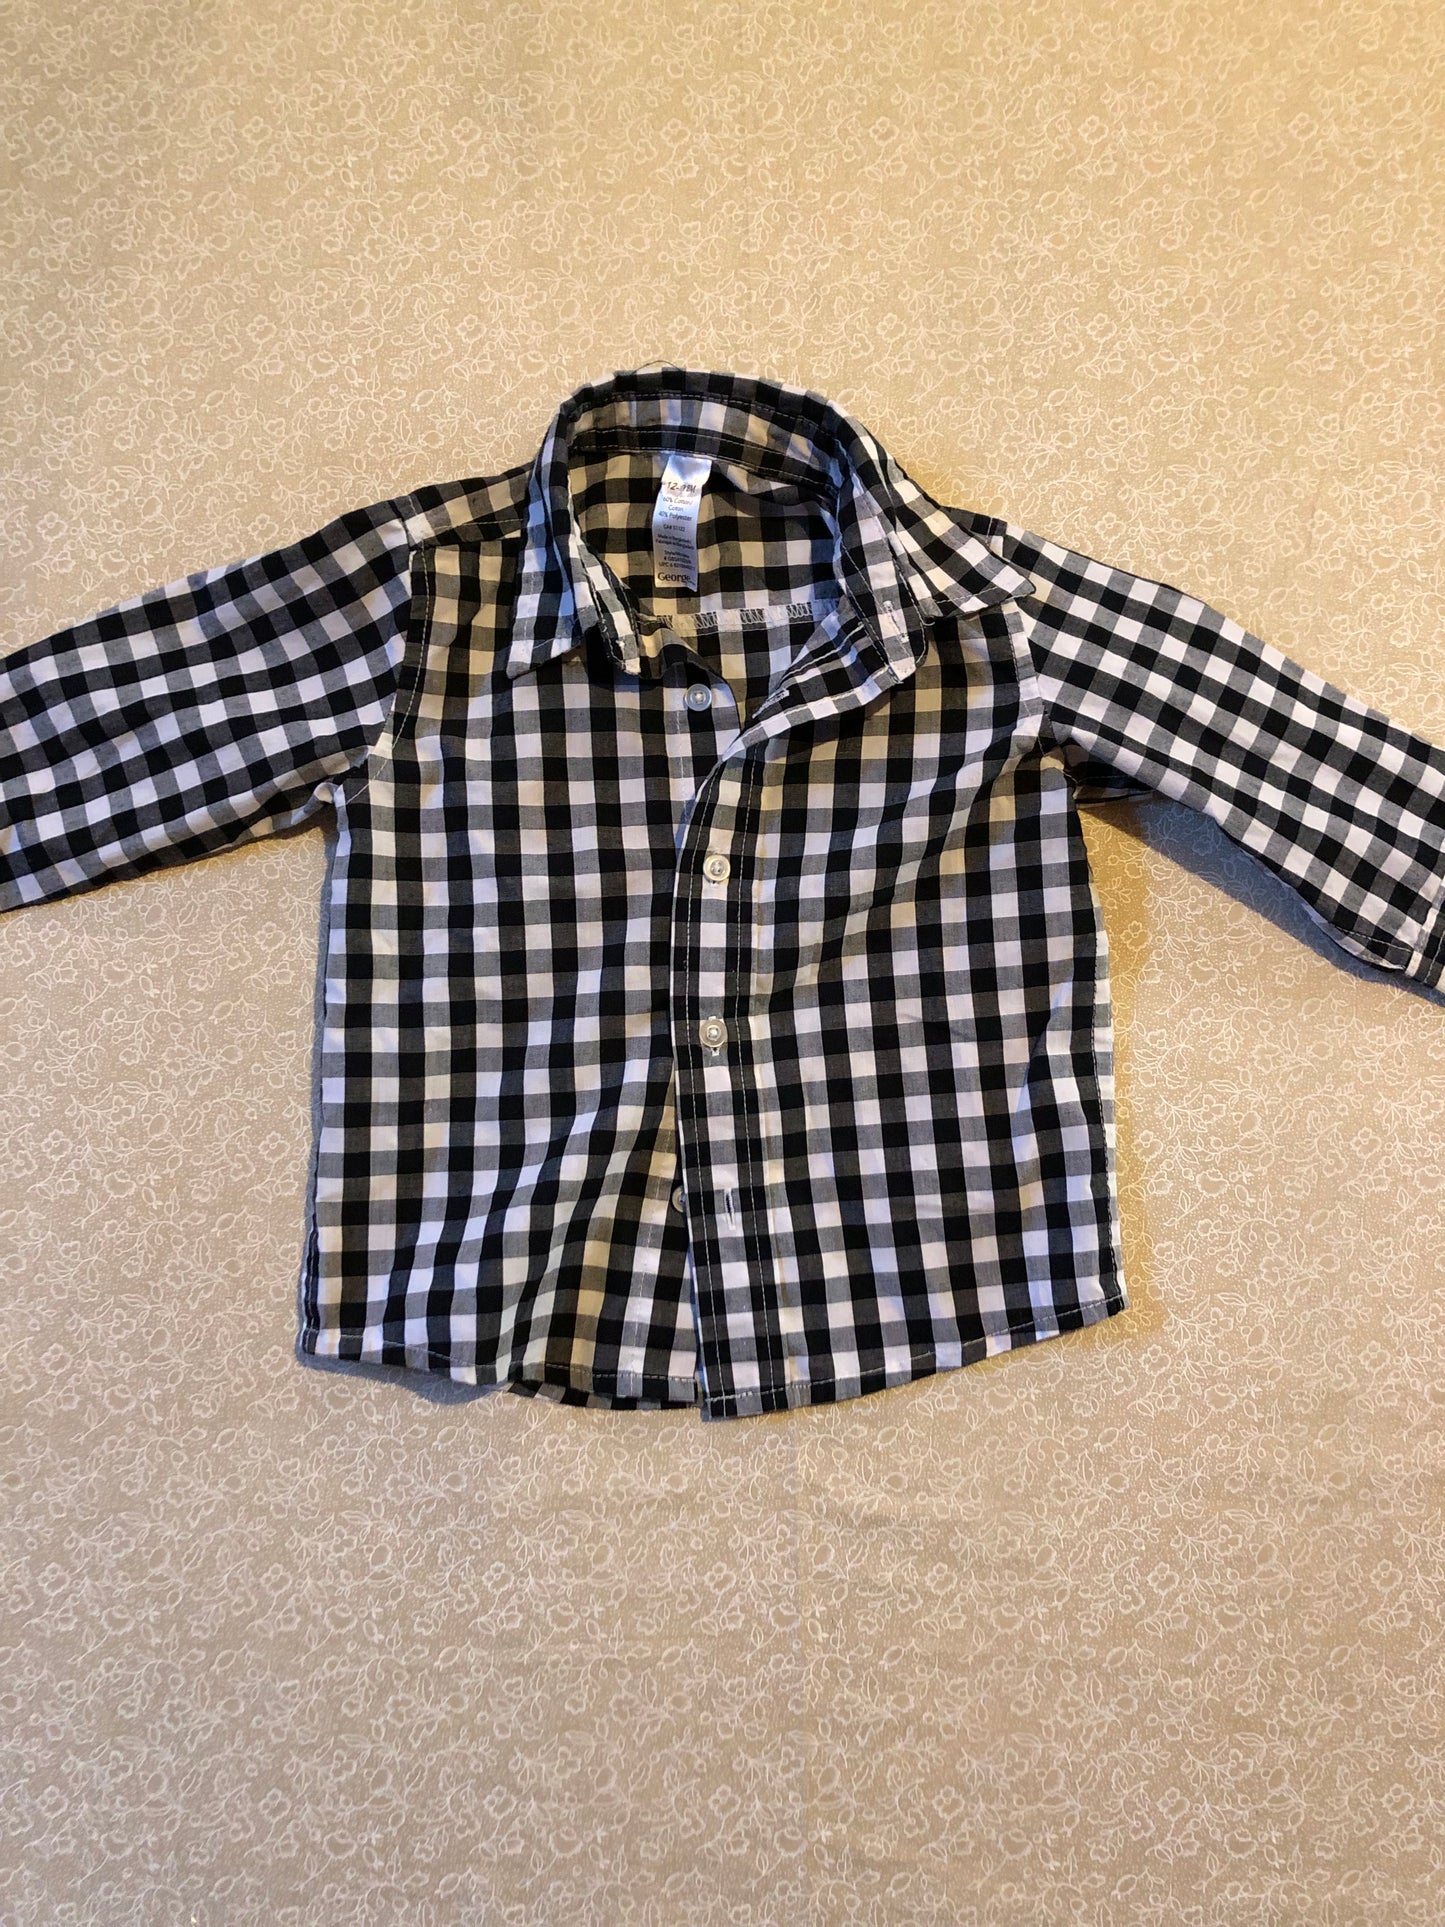 12-18-months-long-sleeve-shirt-george-black-white-plaid